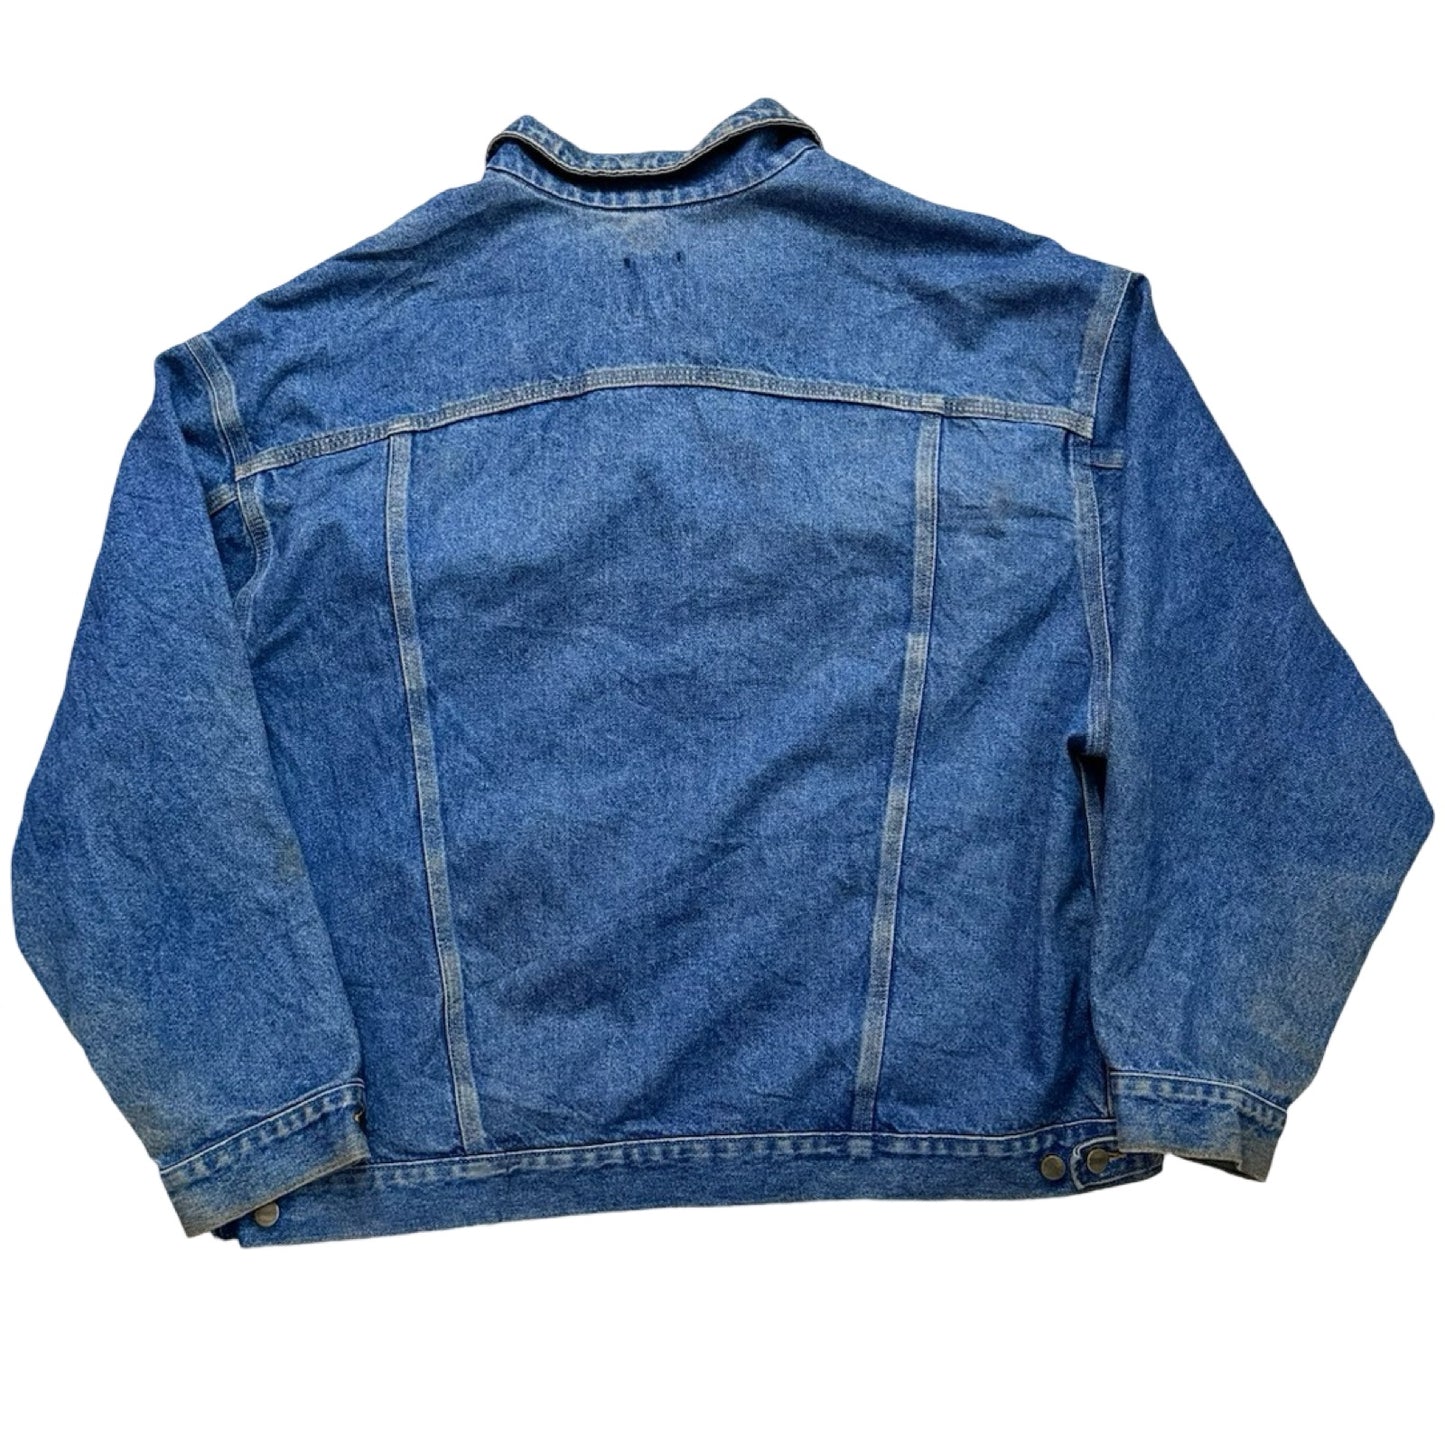 Vintage Carhartt Jean Jacket Size L